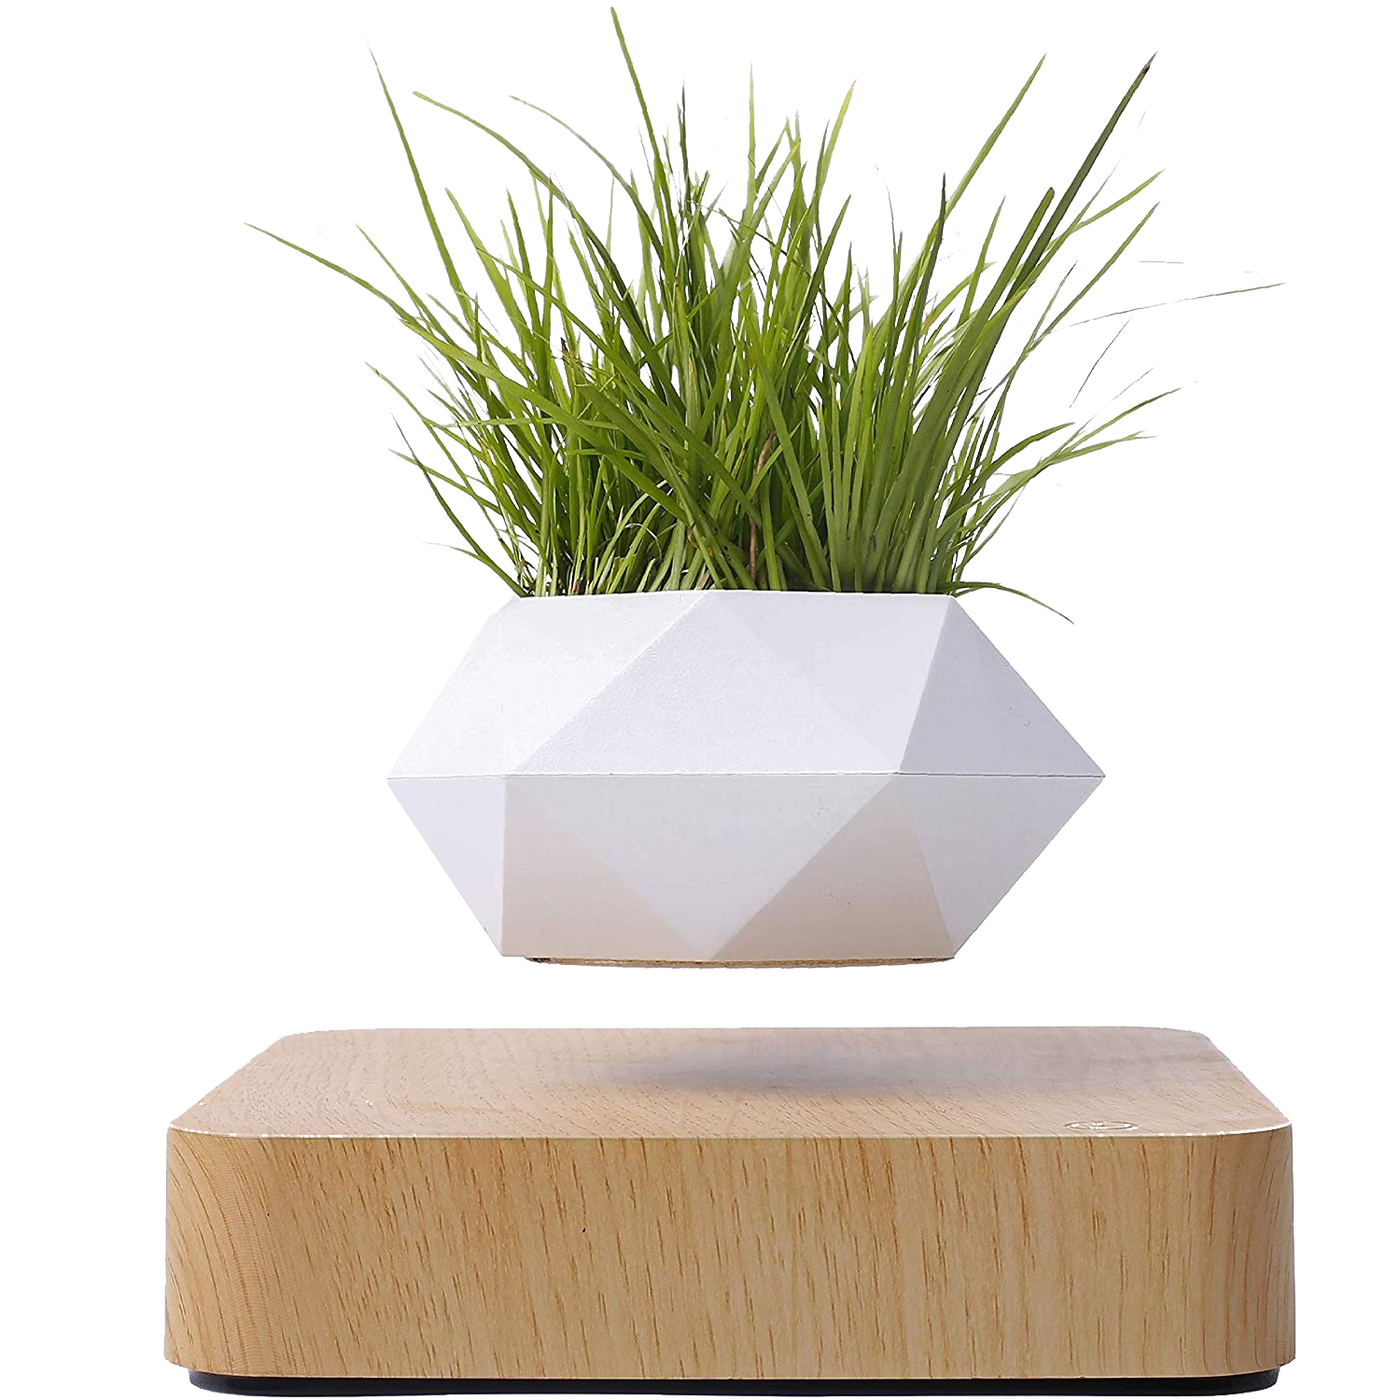 LANGTU Magnetic Levitating Air Bonsai Pot Floating Flower Pot Rotating Potted Planter for Home, Office & Desk Decor Maple